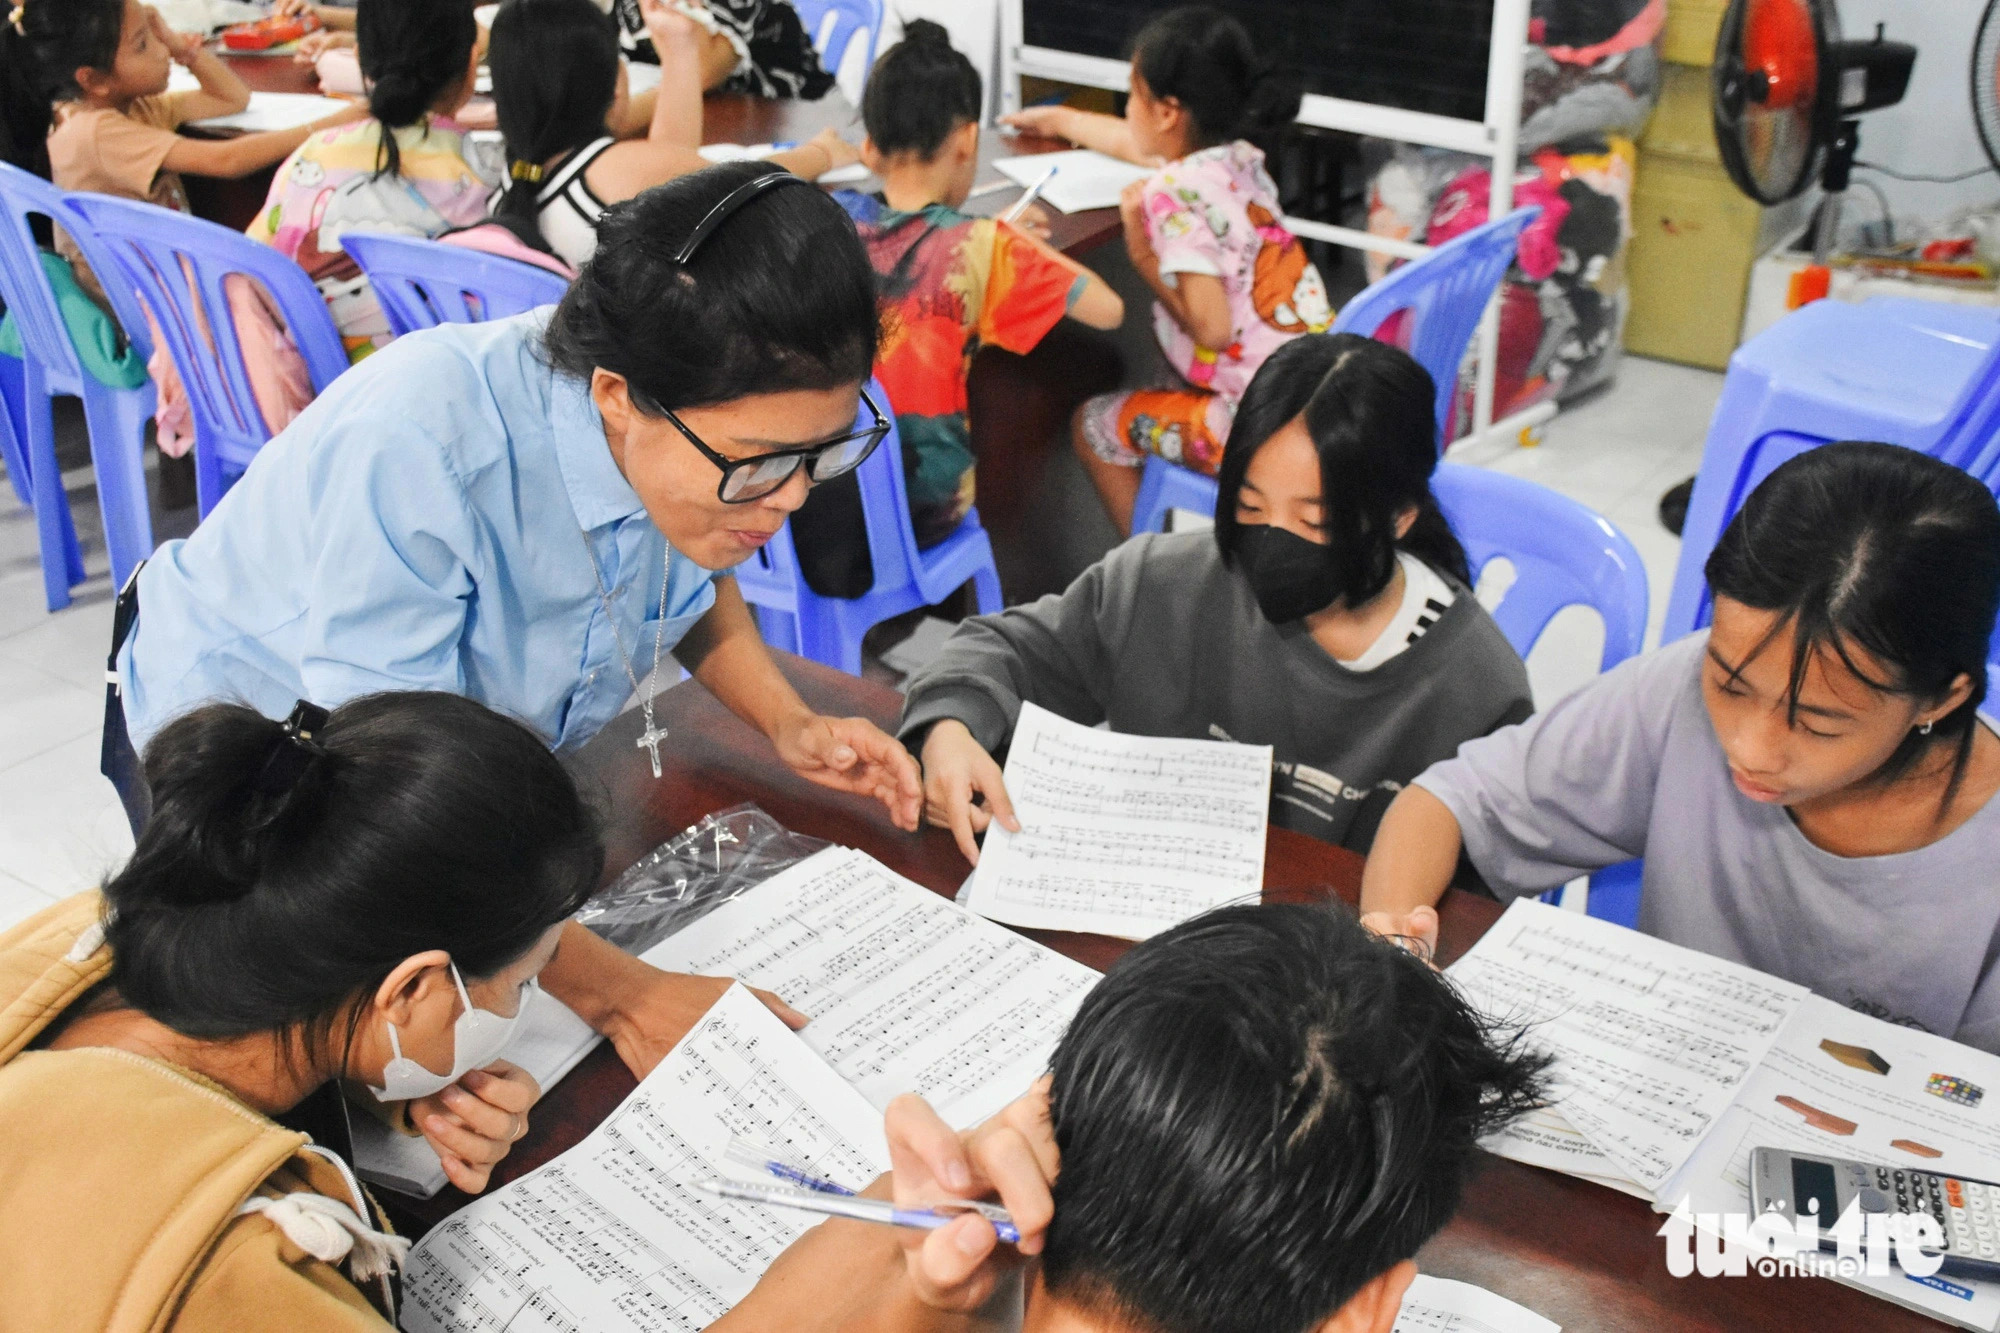 Duc teaches English to a group of students. Photo: Tran Hoai / Tuoi Tre